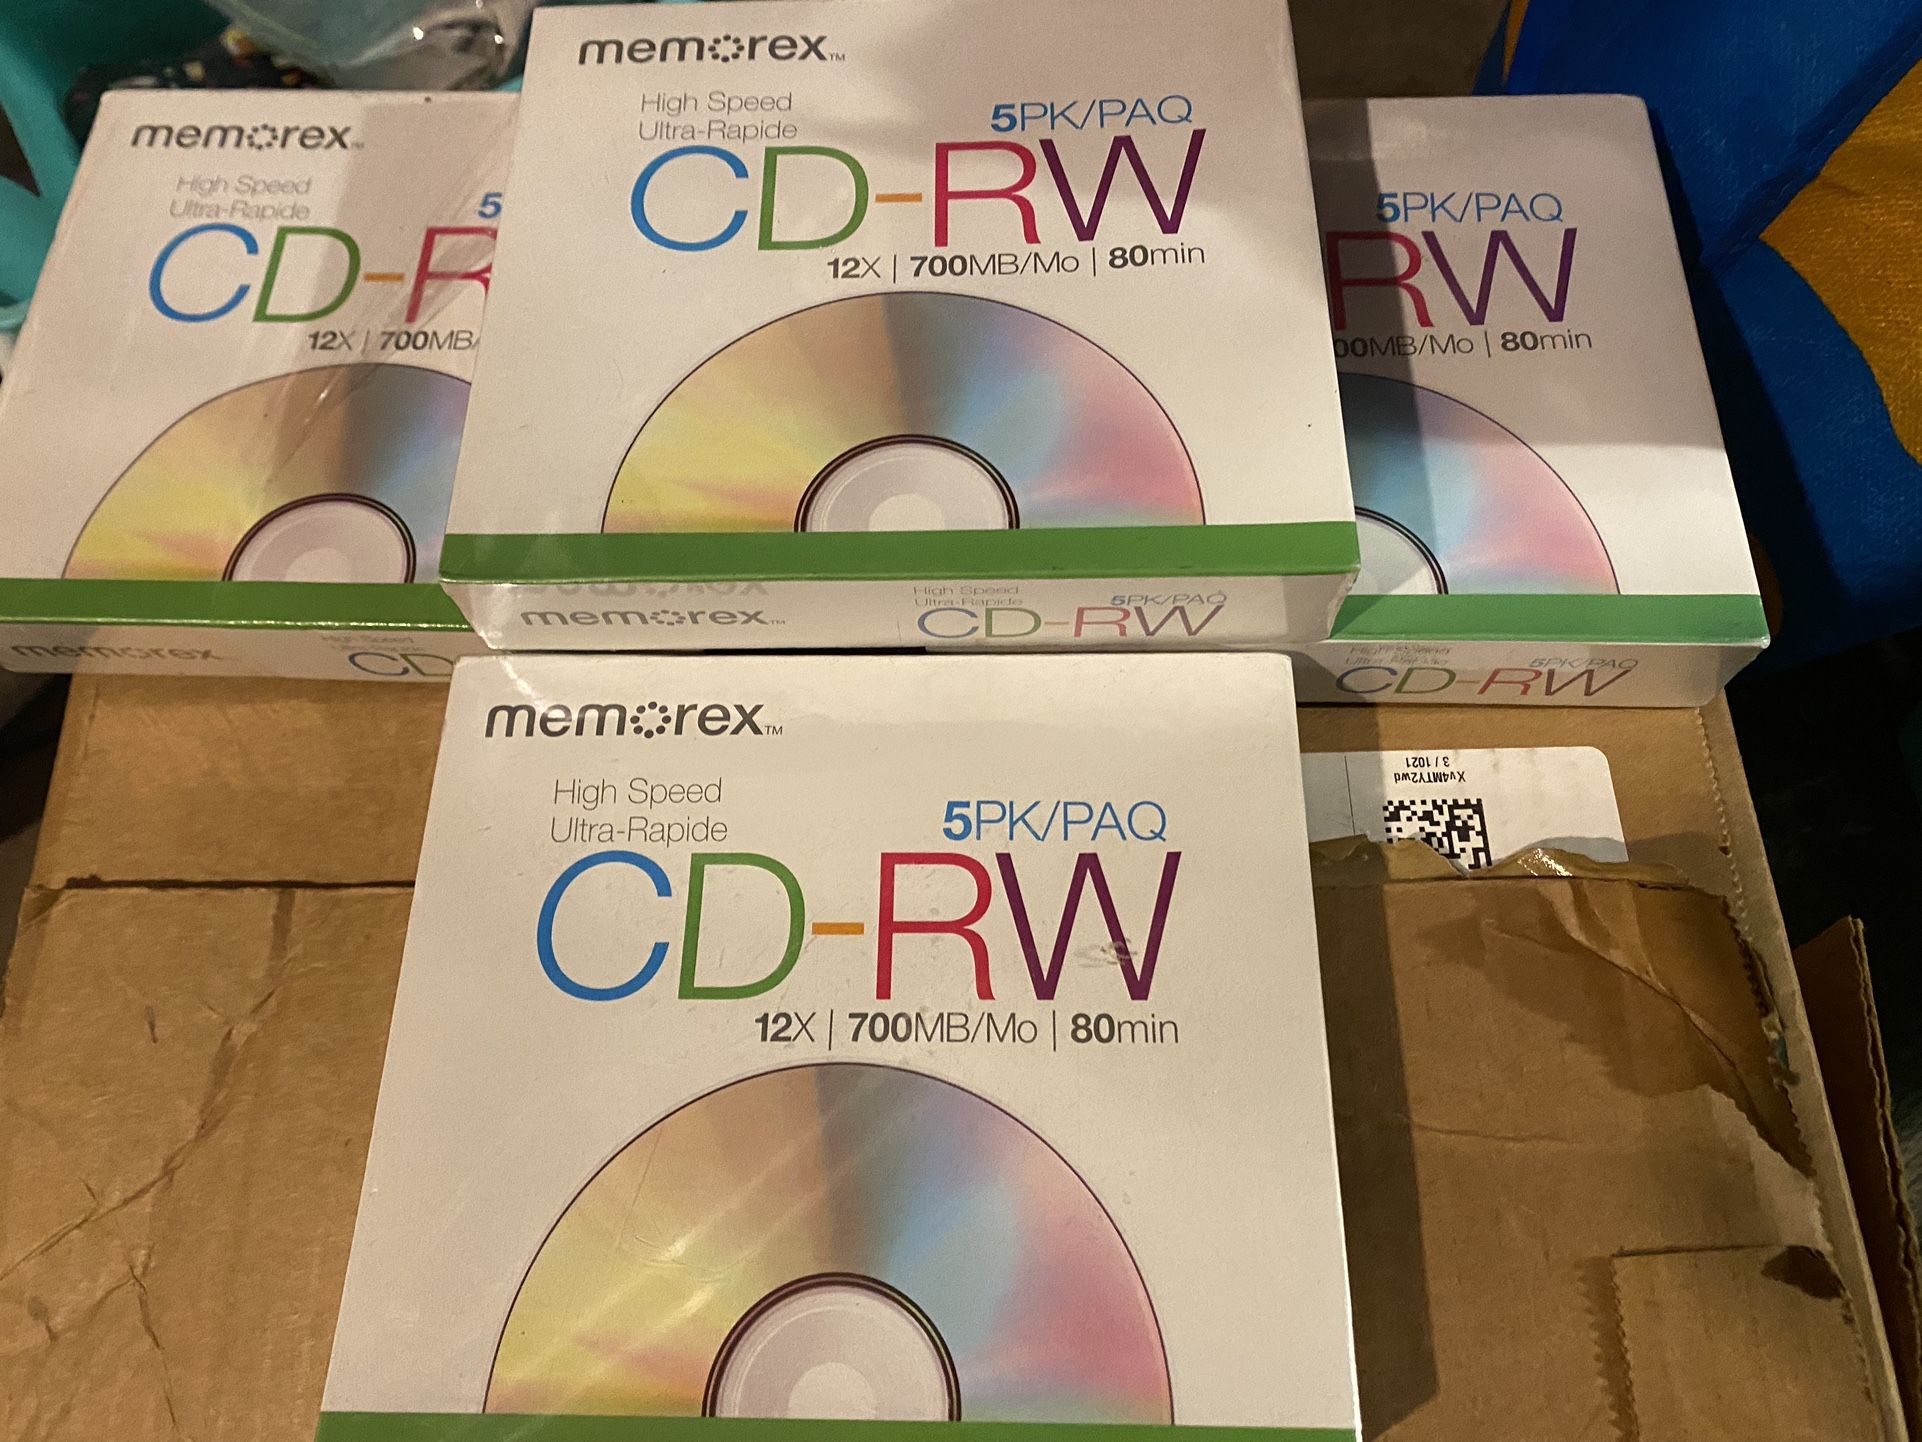 Lot of 4 New Memorex 5PK CD-RW 12X 700MB/MO 80min